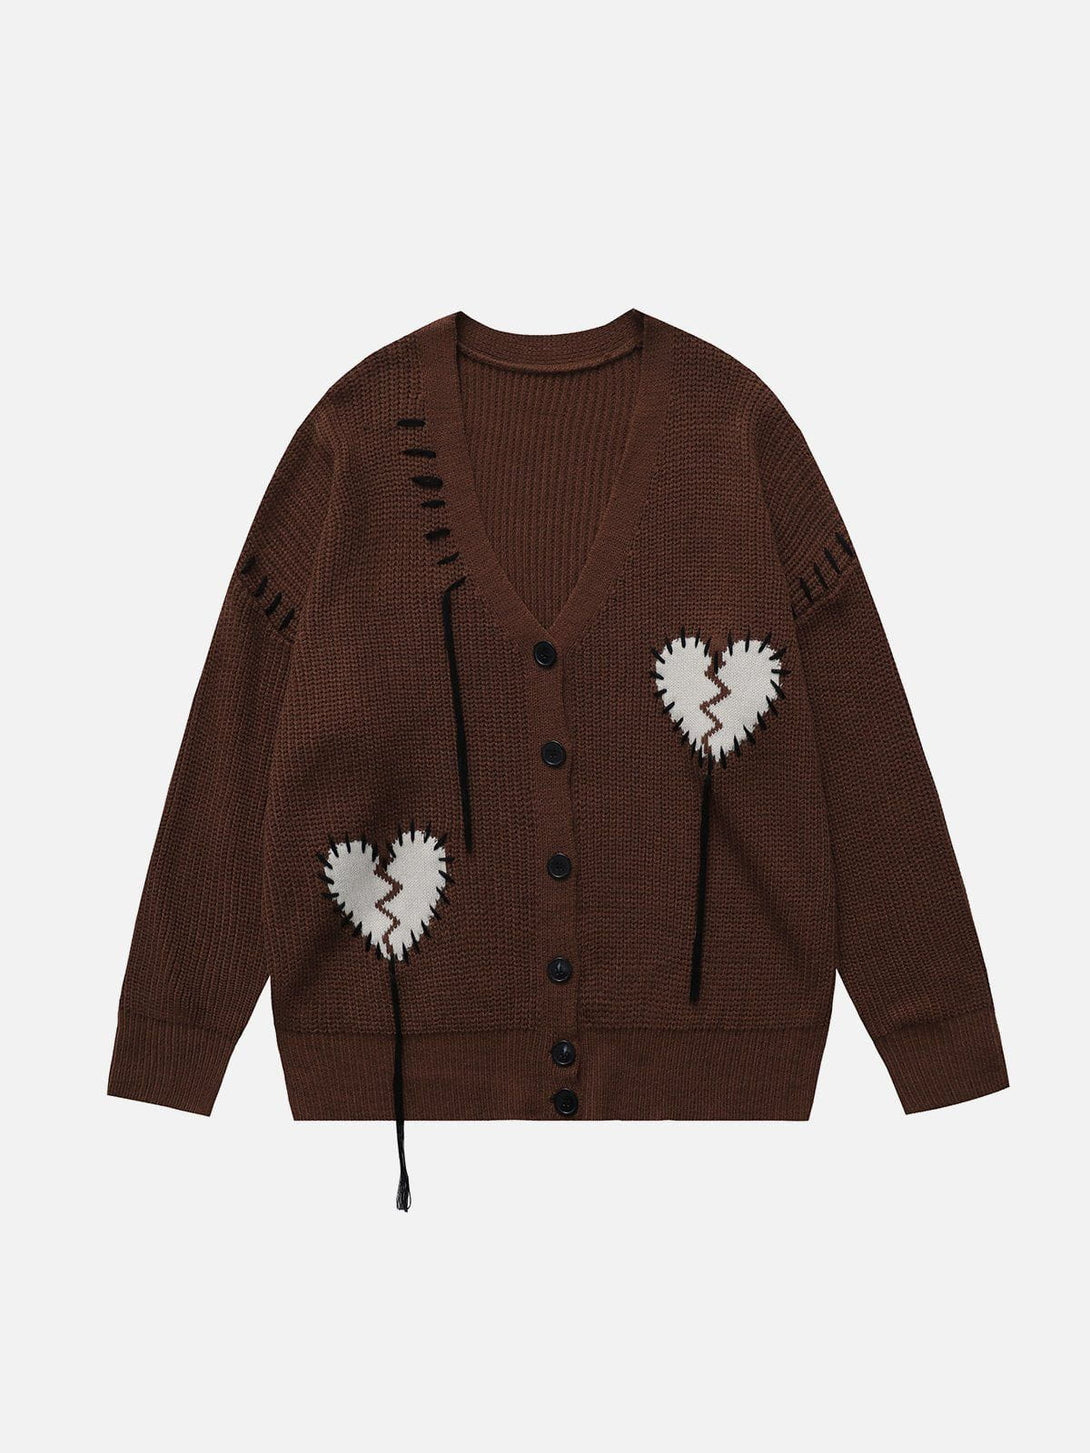 Majesda® - Embroidered Heart Fringe Cardigan outfit ideas streetwear fashion